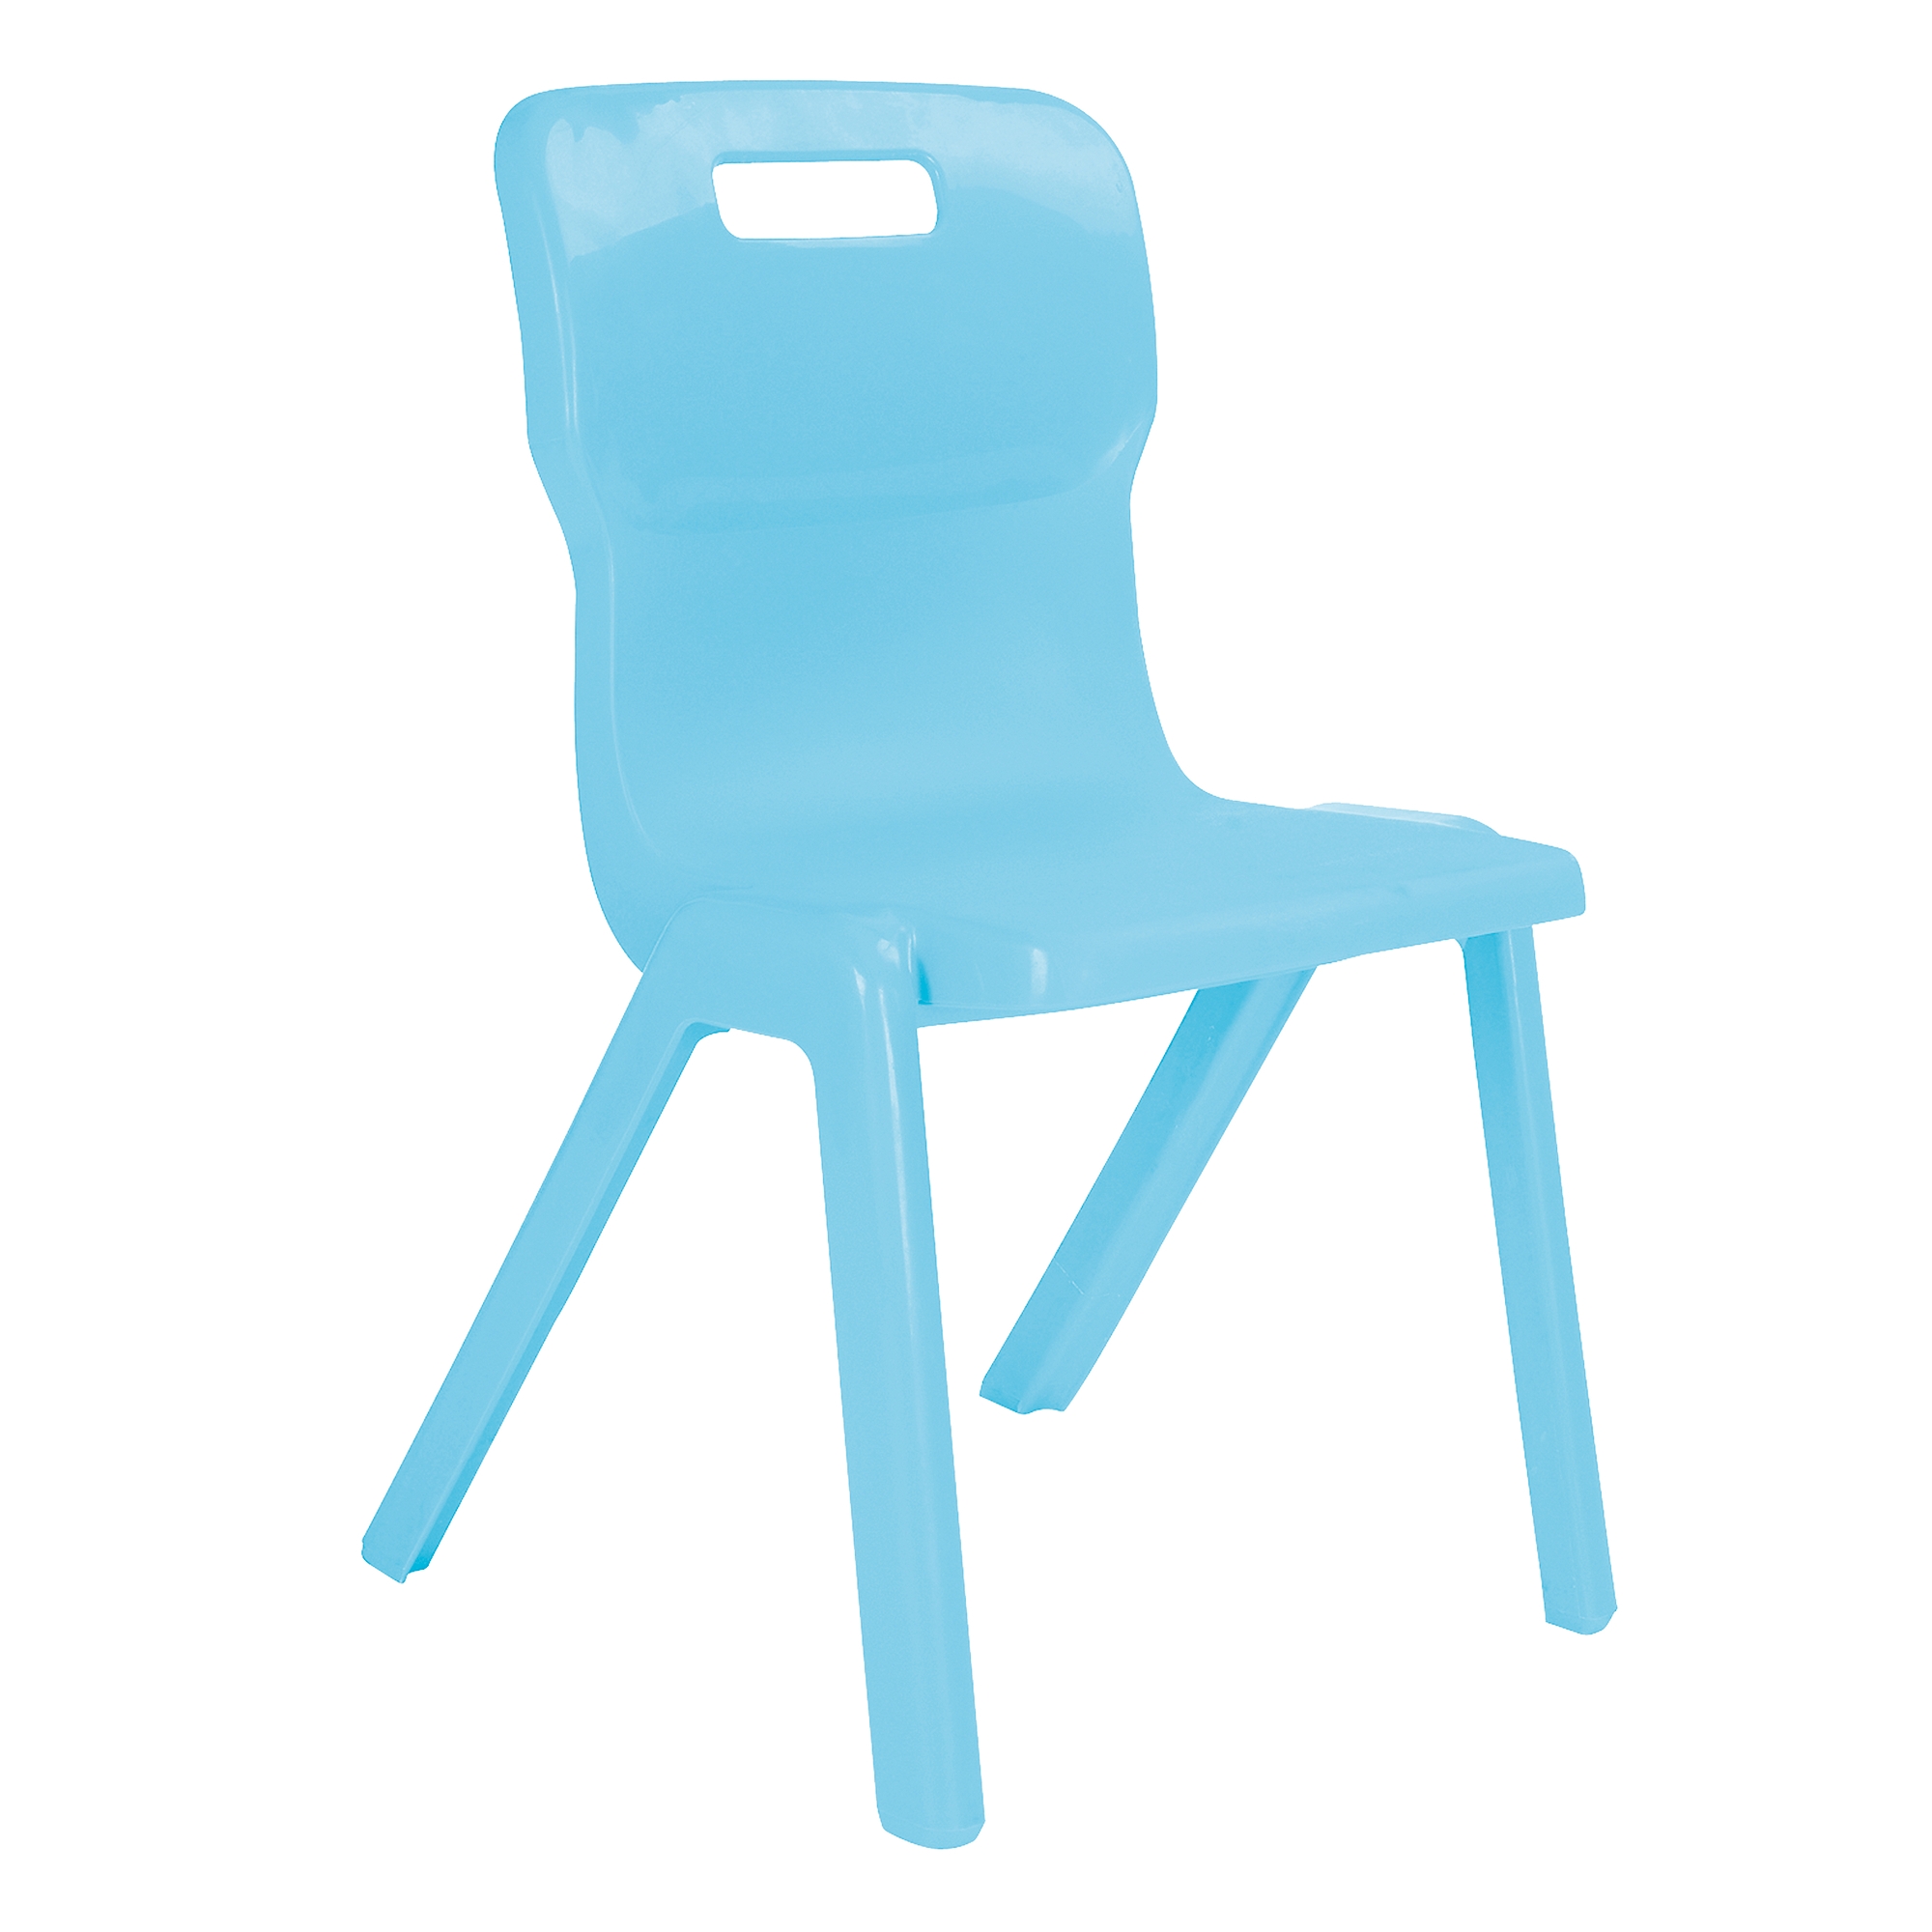 One Piece Titan Chair - Size 2 Ages 4-6 Sky Blue